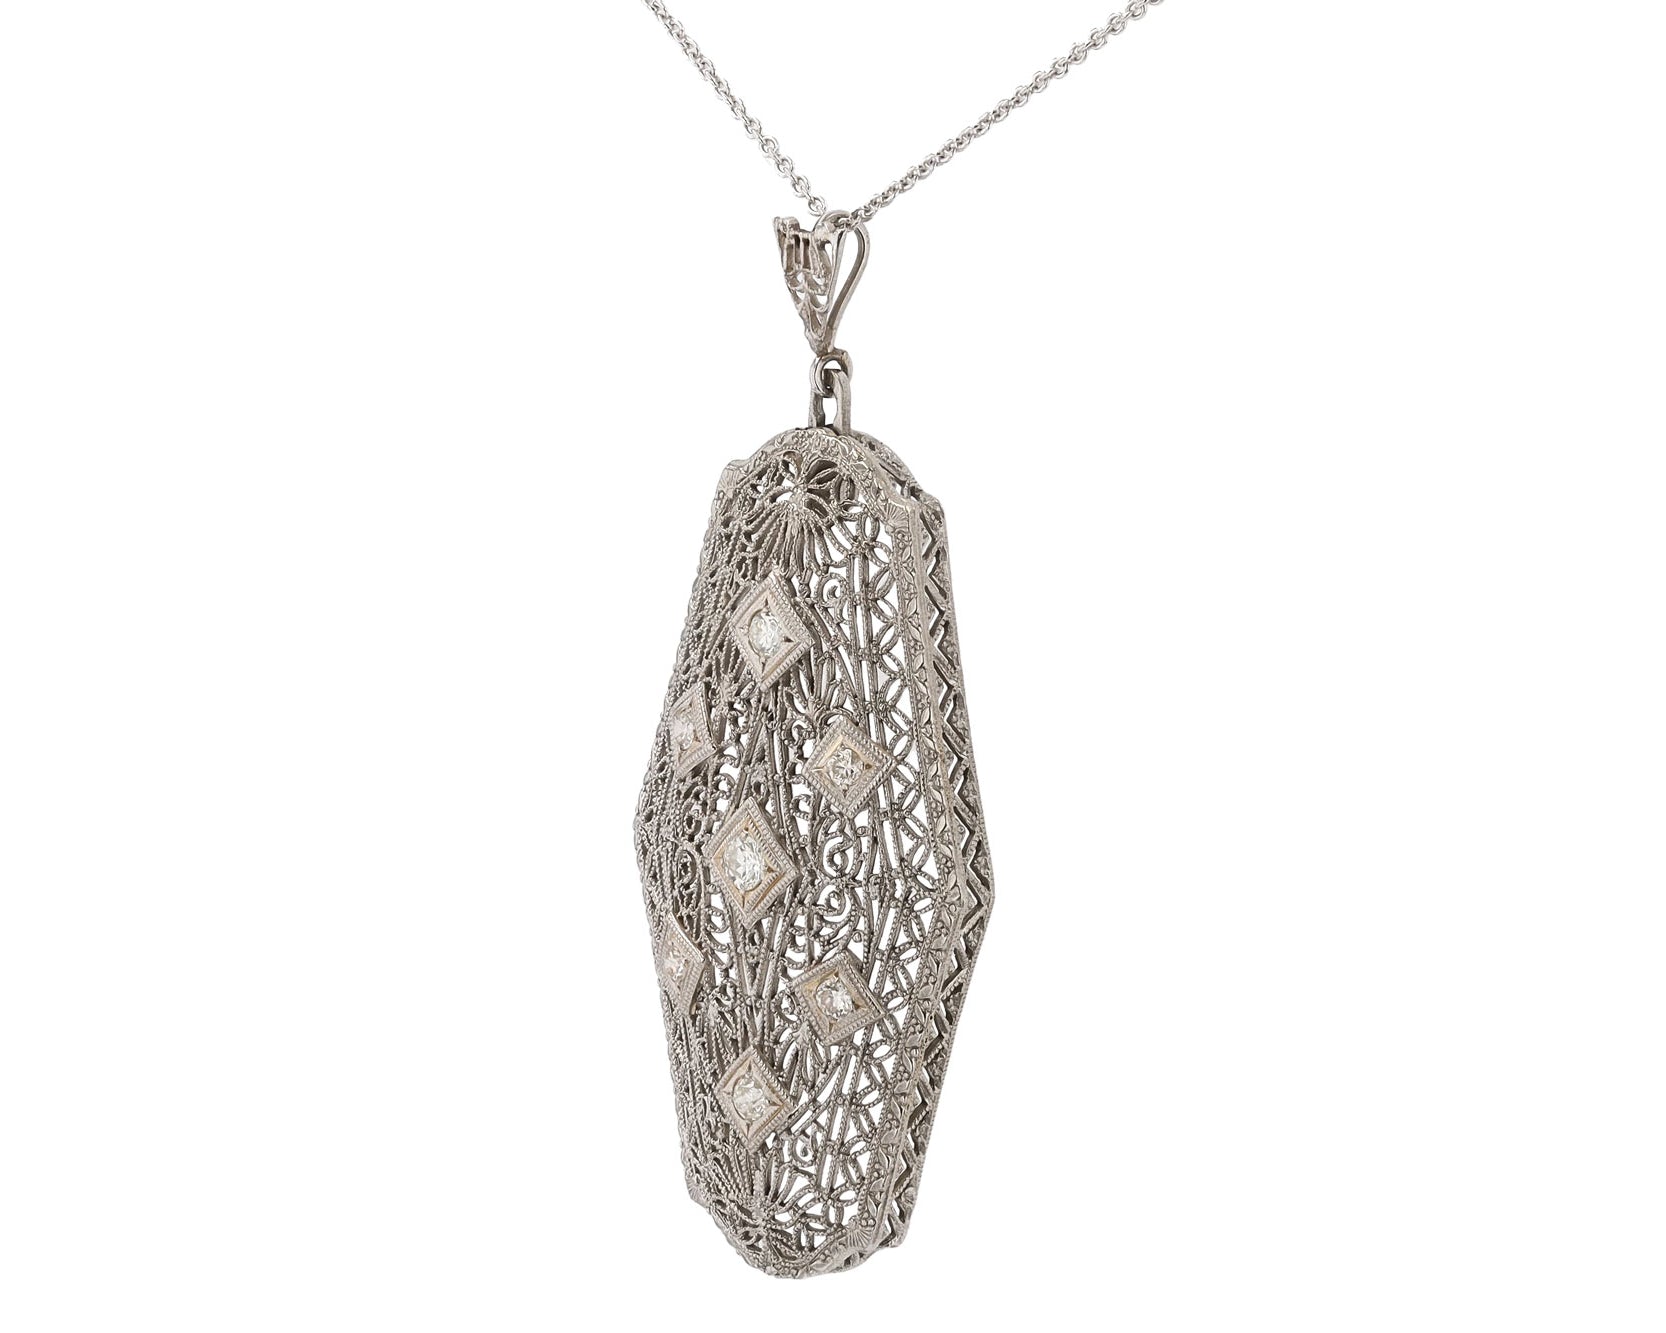 Antique Art Deco 1920s Filigree 7 Diamond Pendant Necklace